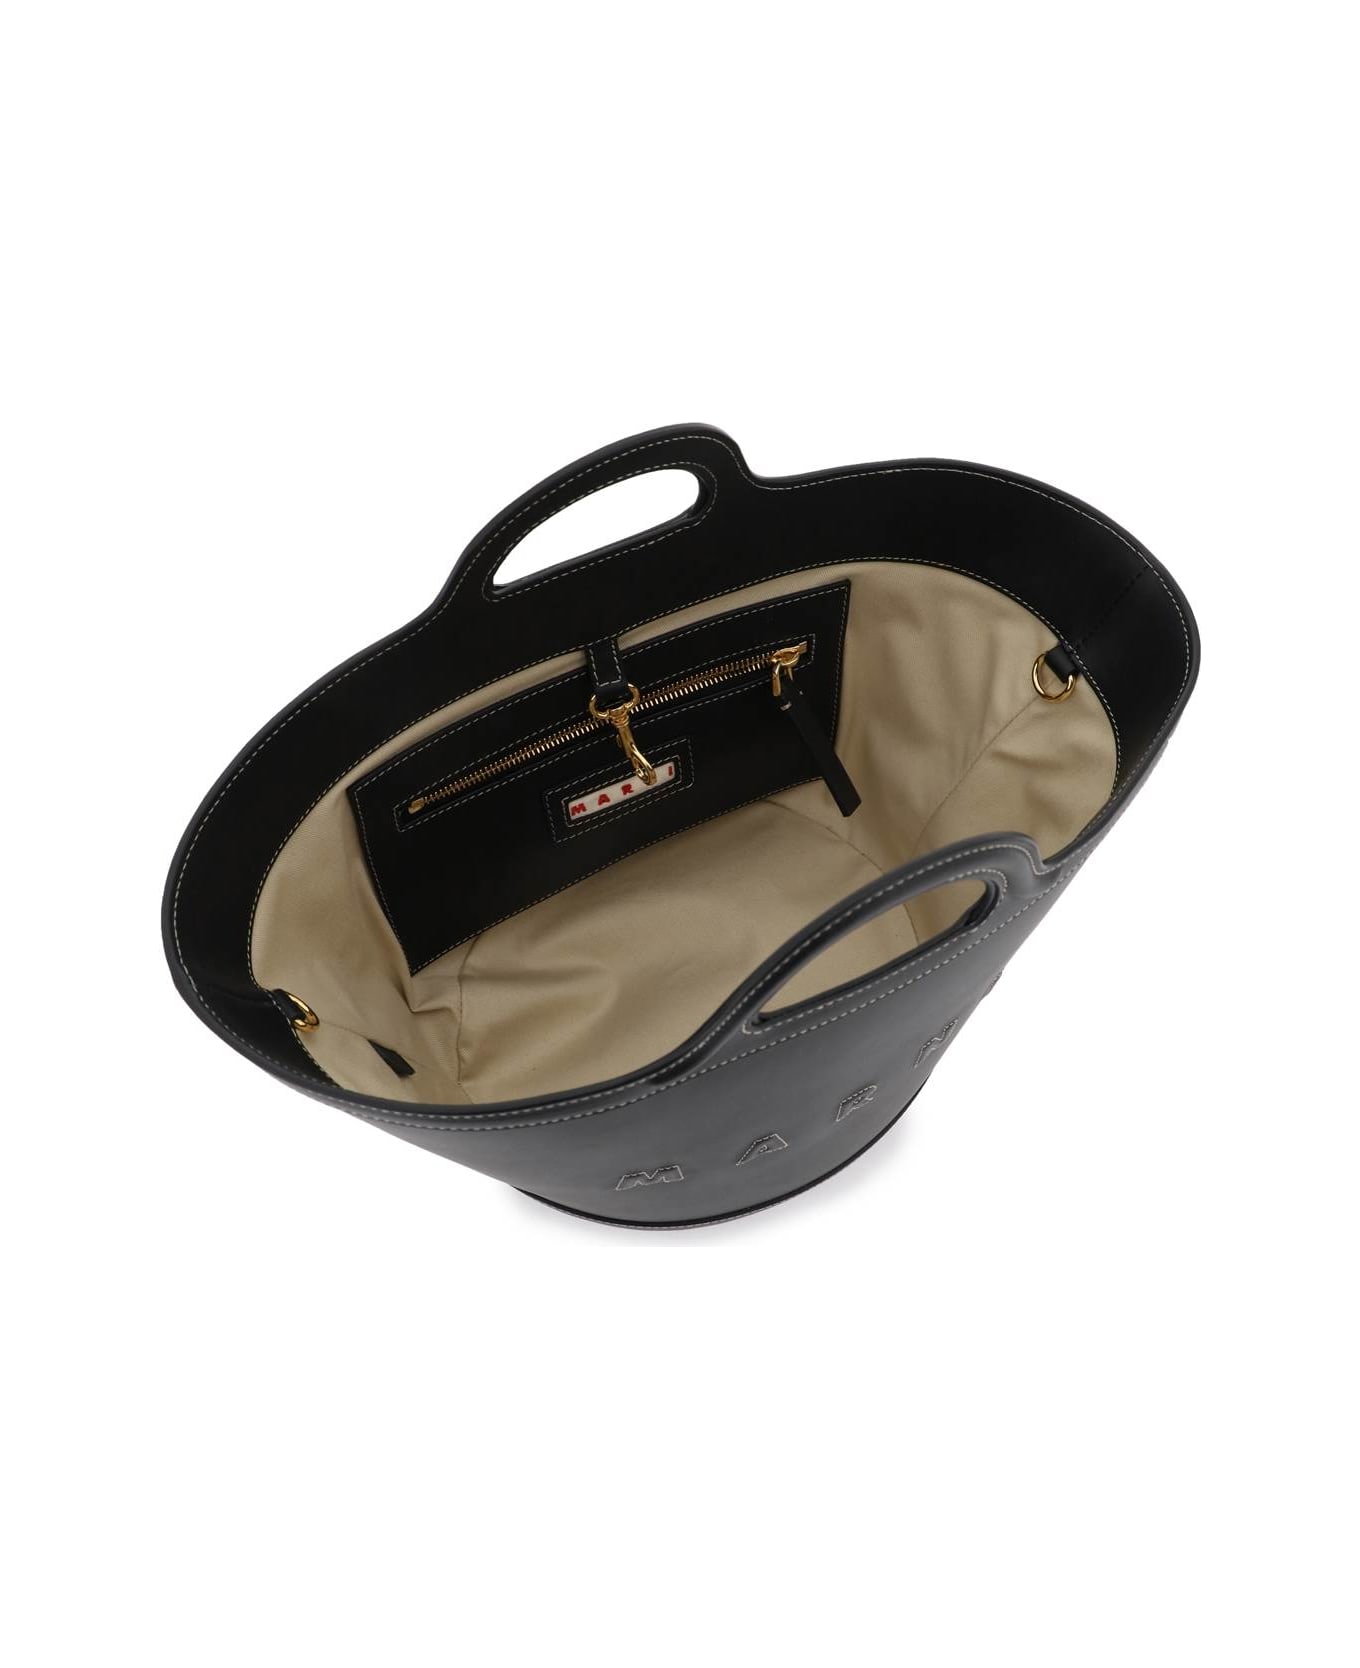 Marni Black Leather Small Tropicalia Bag - Black トートバッグ